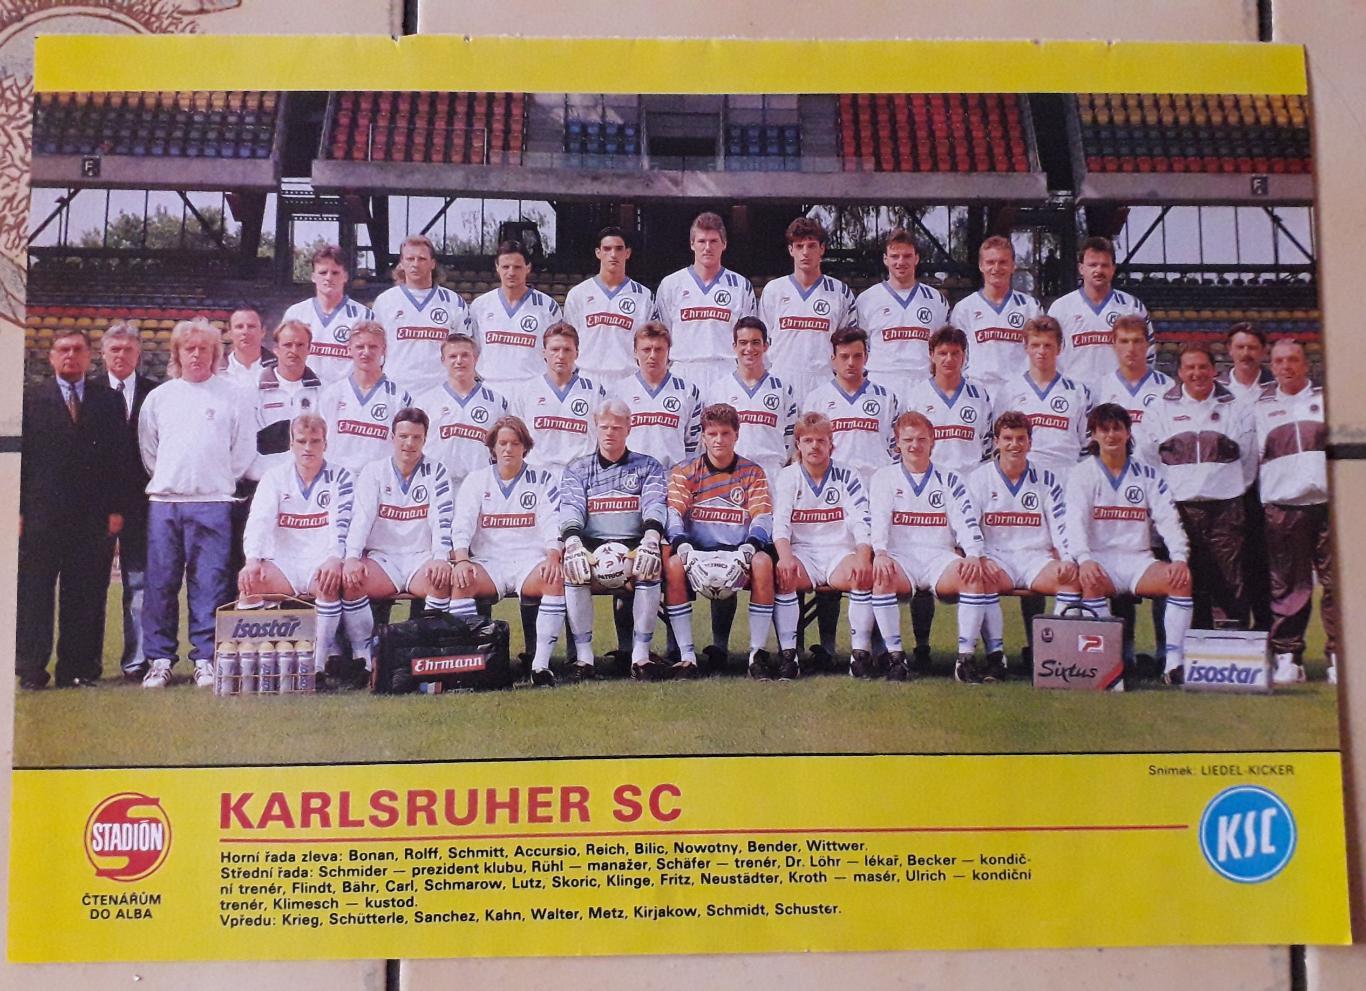 Karlsruher SC.Плакат формата А4 из журнала Stadion.